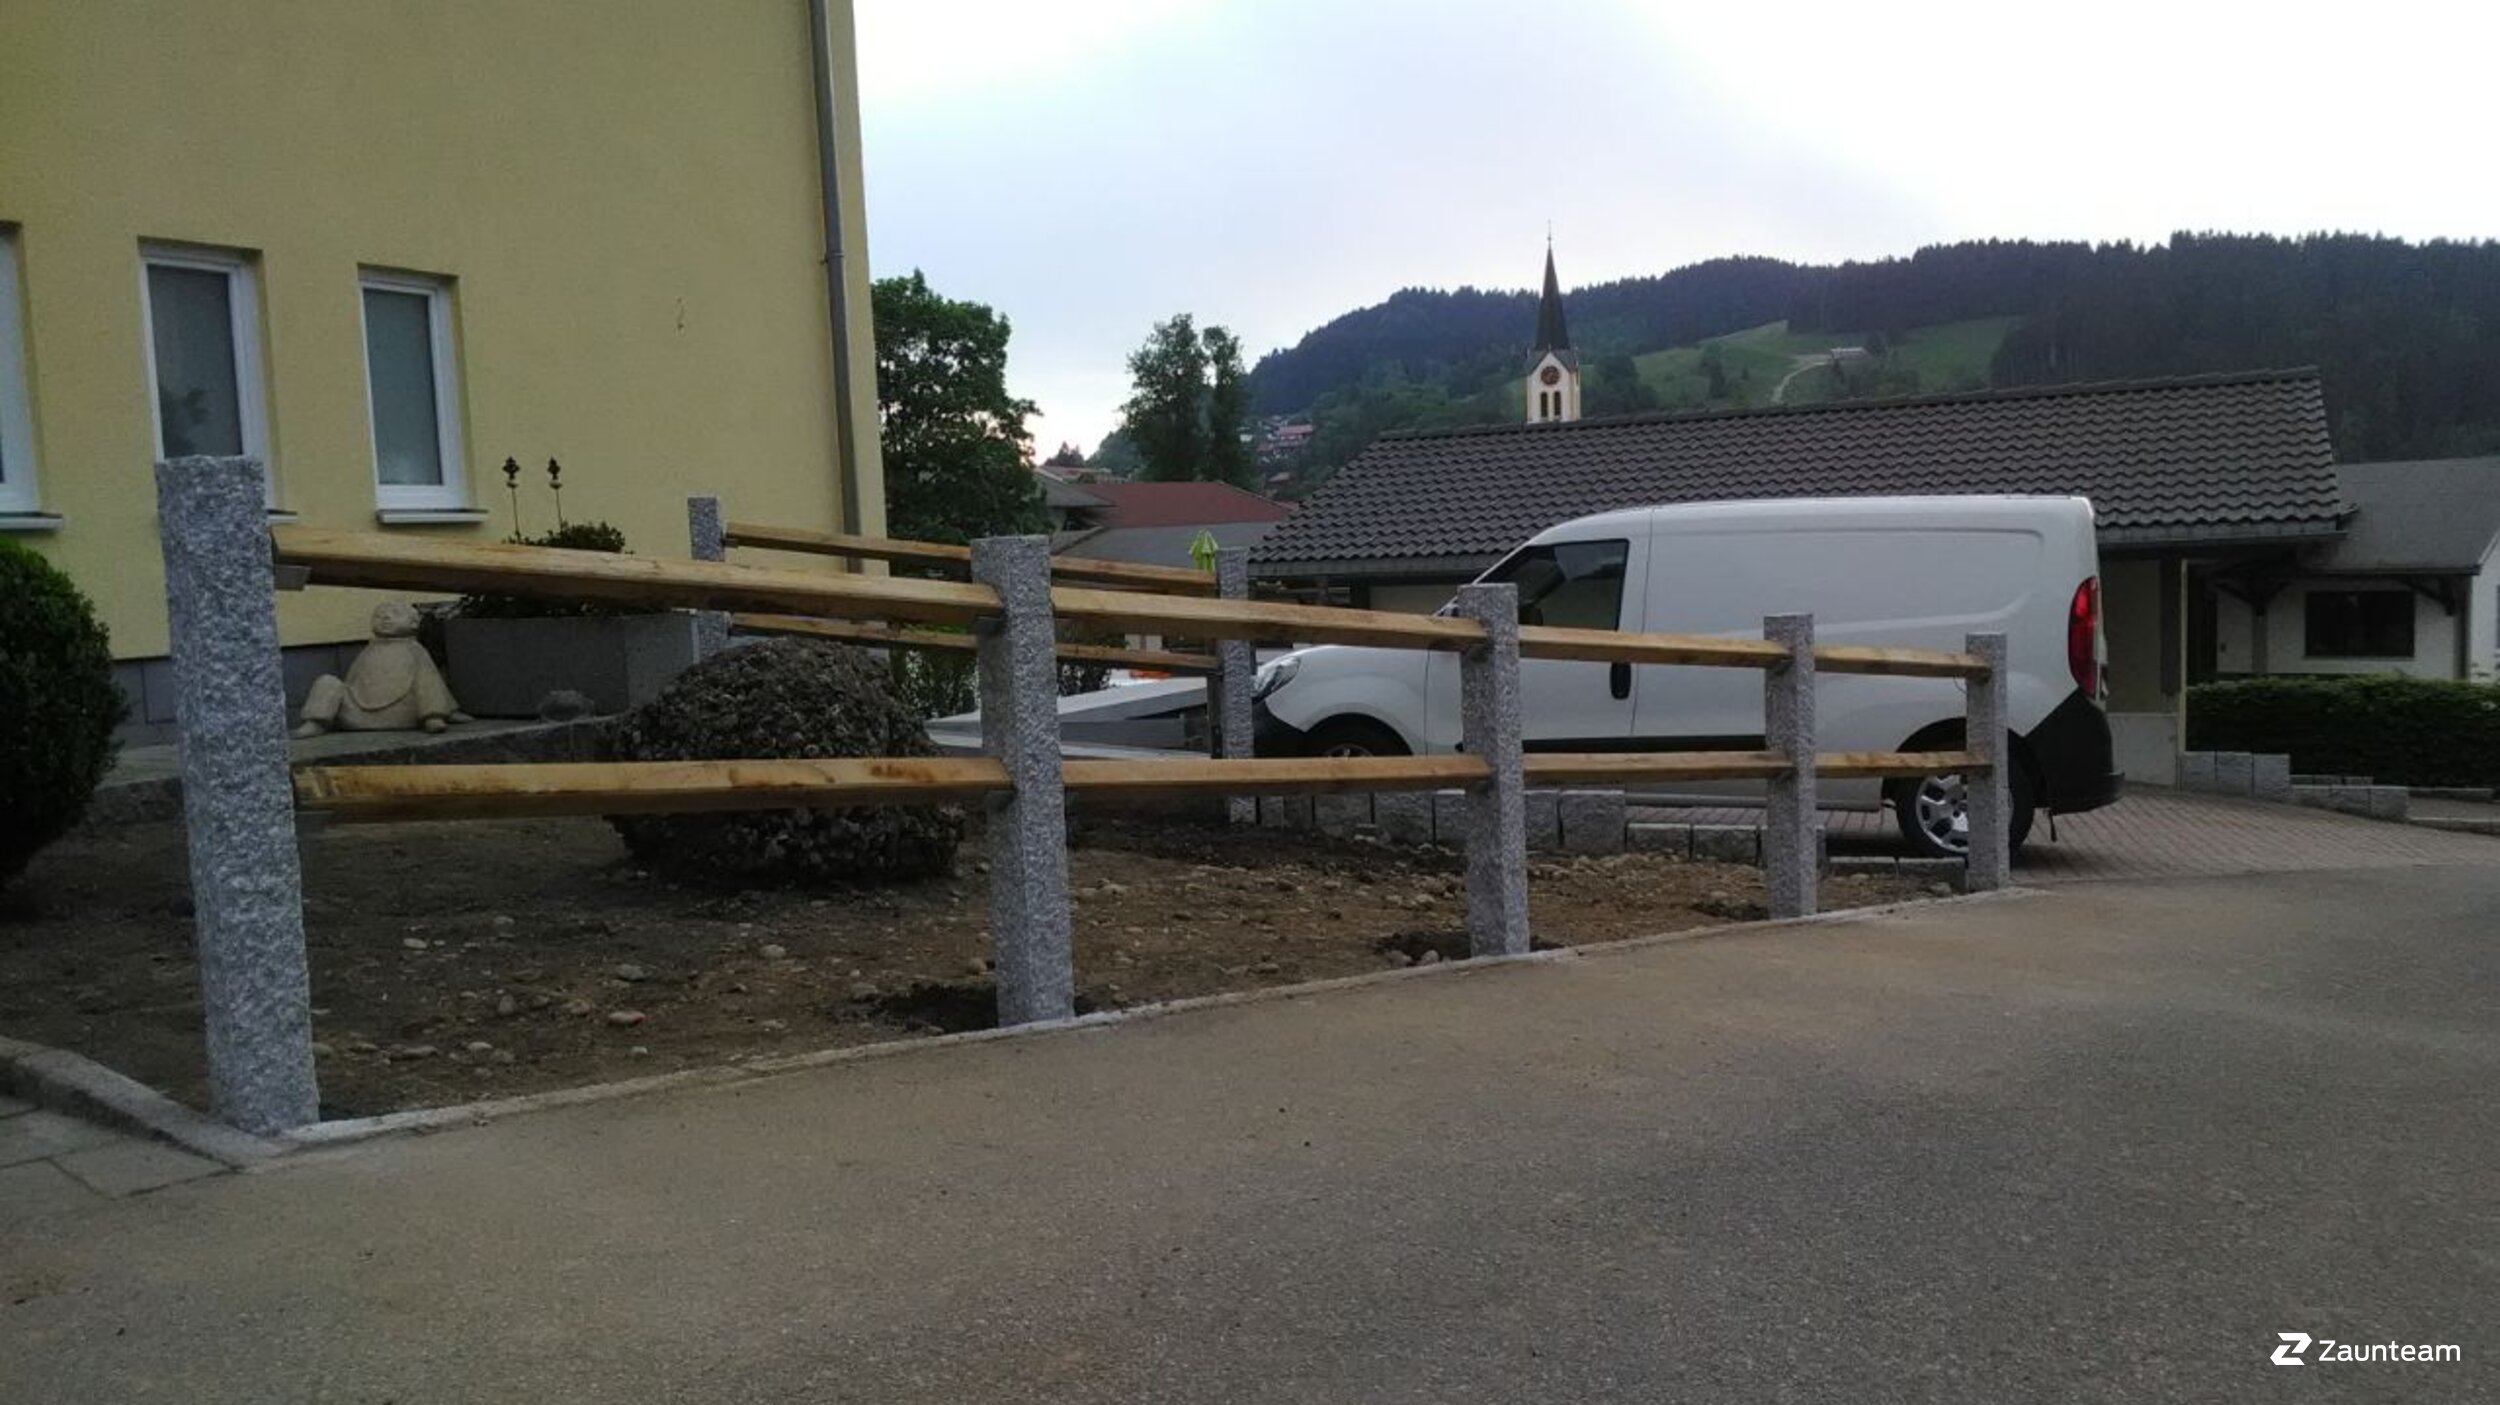 Clôture de chemin de 2018 à 87534 Oberstaufen Allemagne de Zaunteam Allgäu.